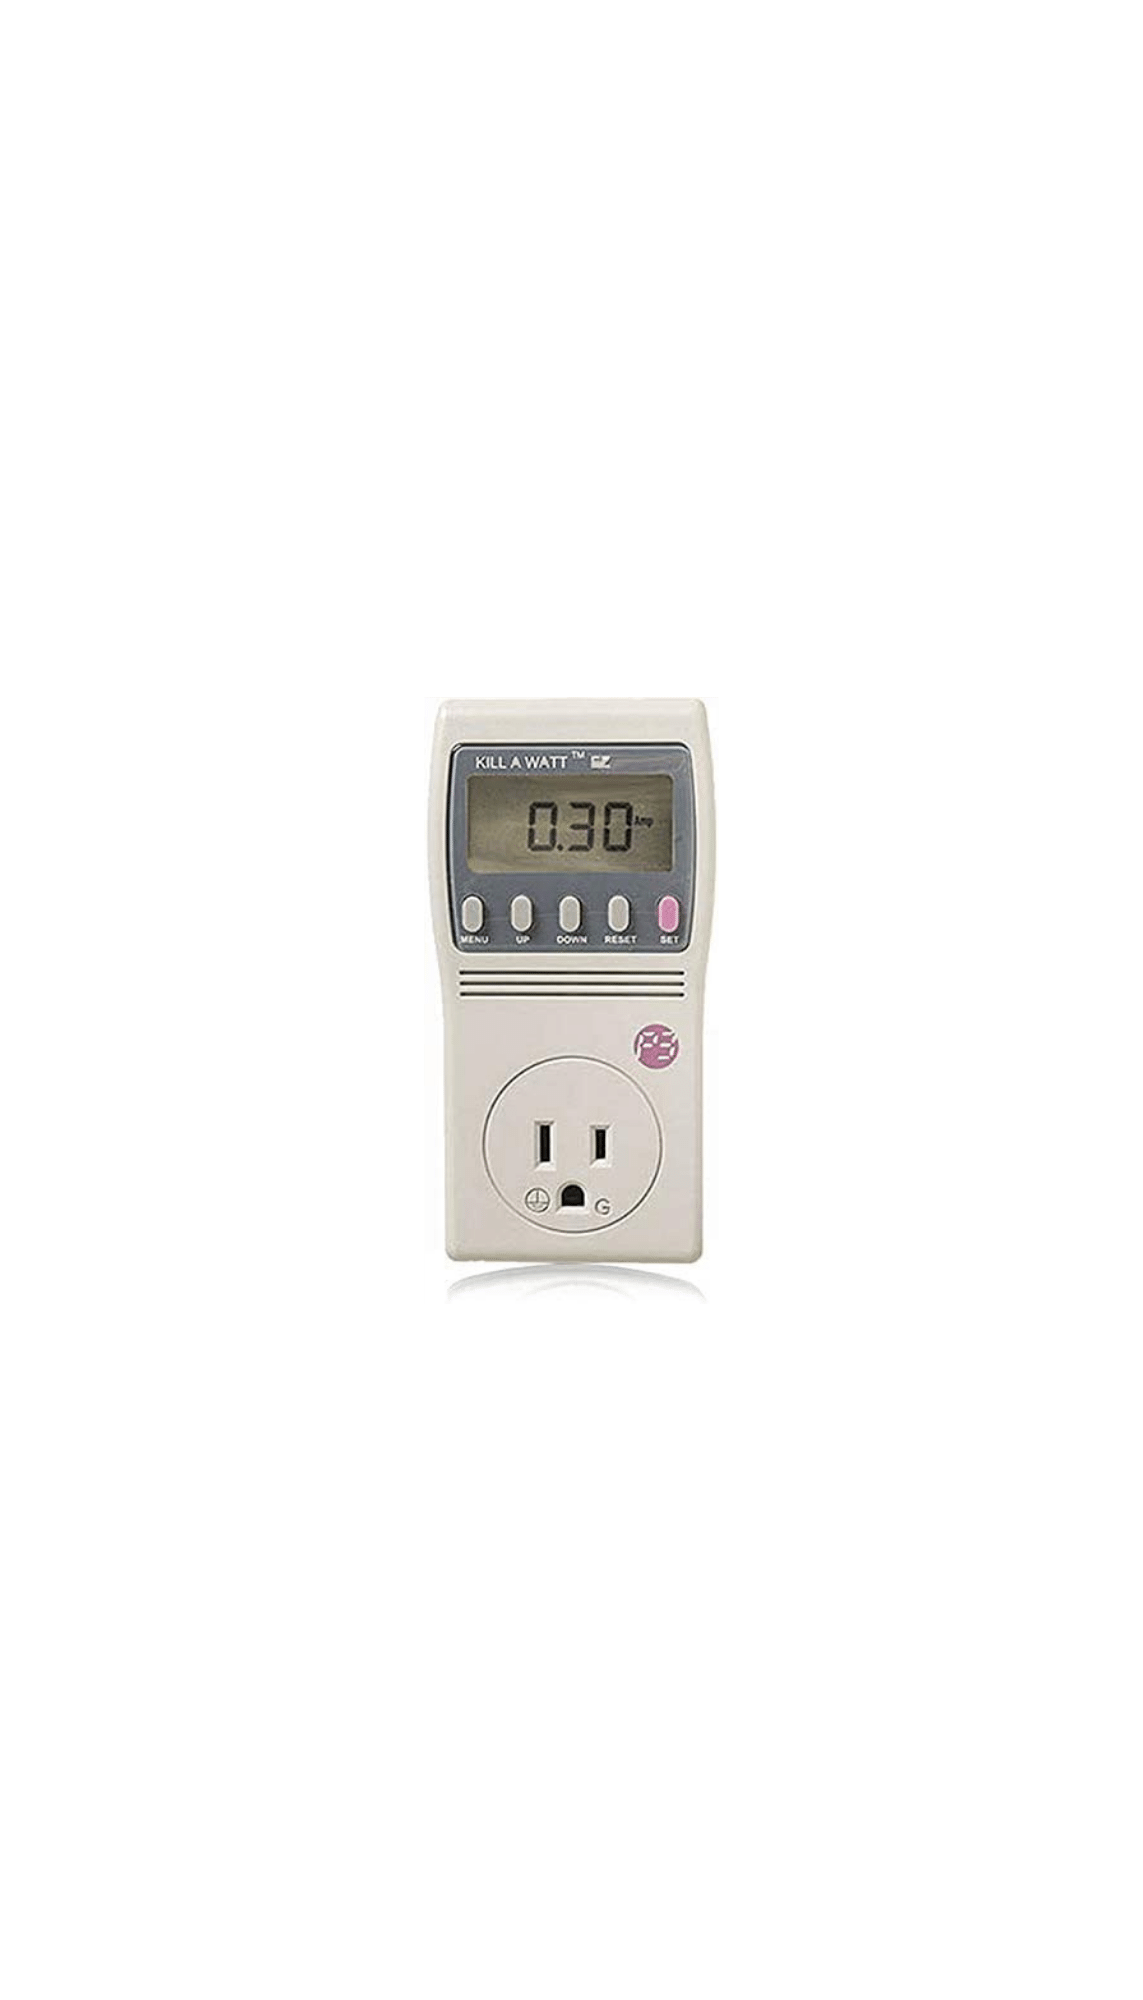 Kill a watt ez electricity usage monitor